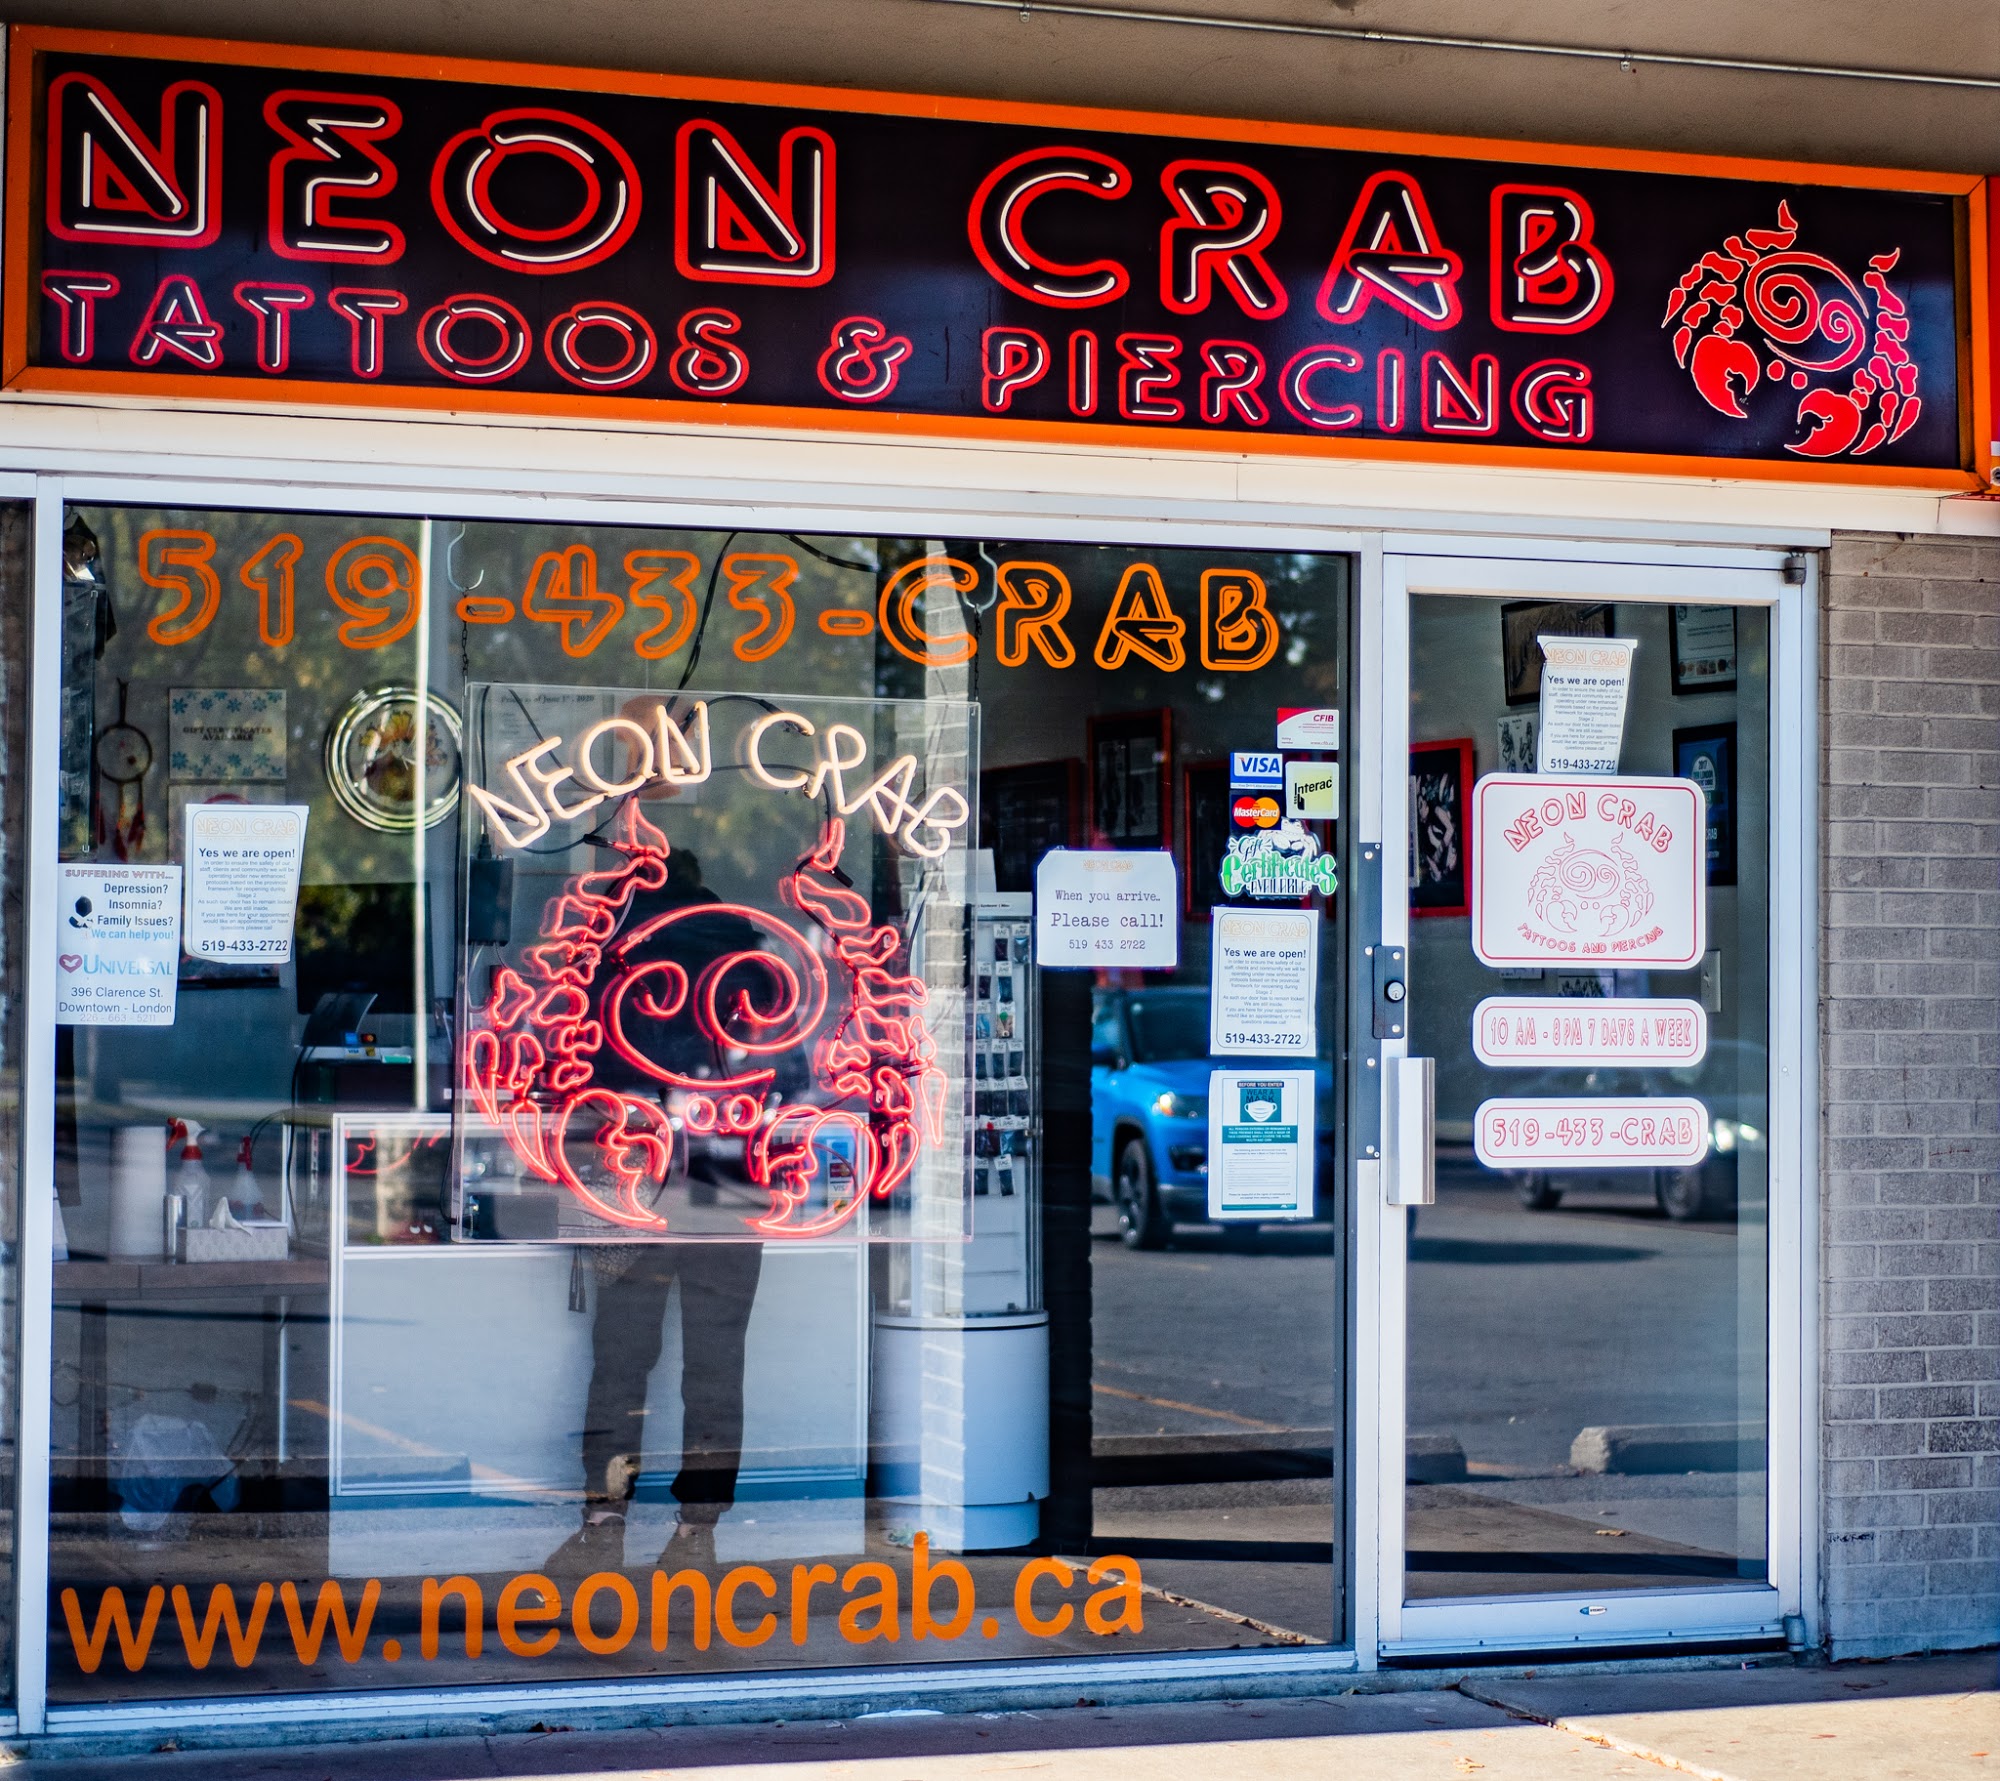 Neon Crab Tattoos & Piercing